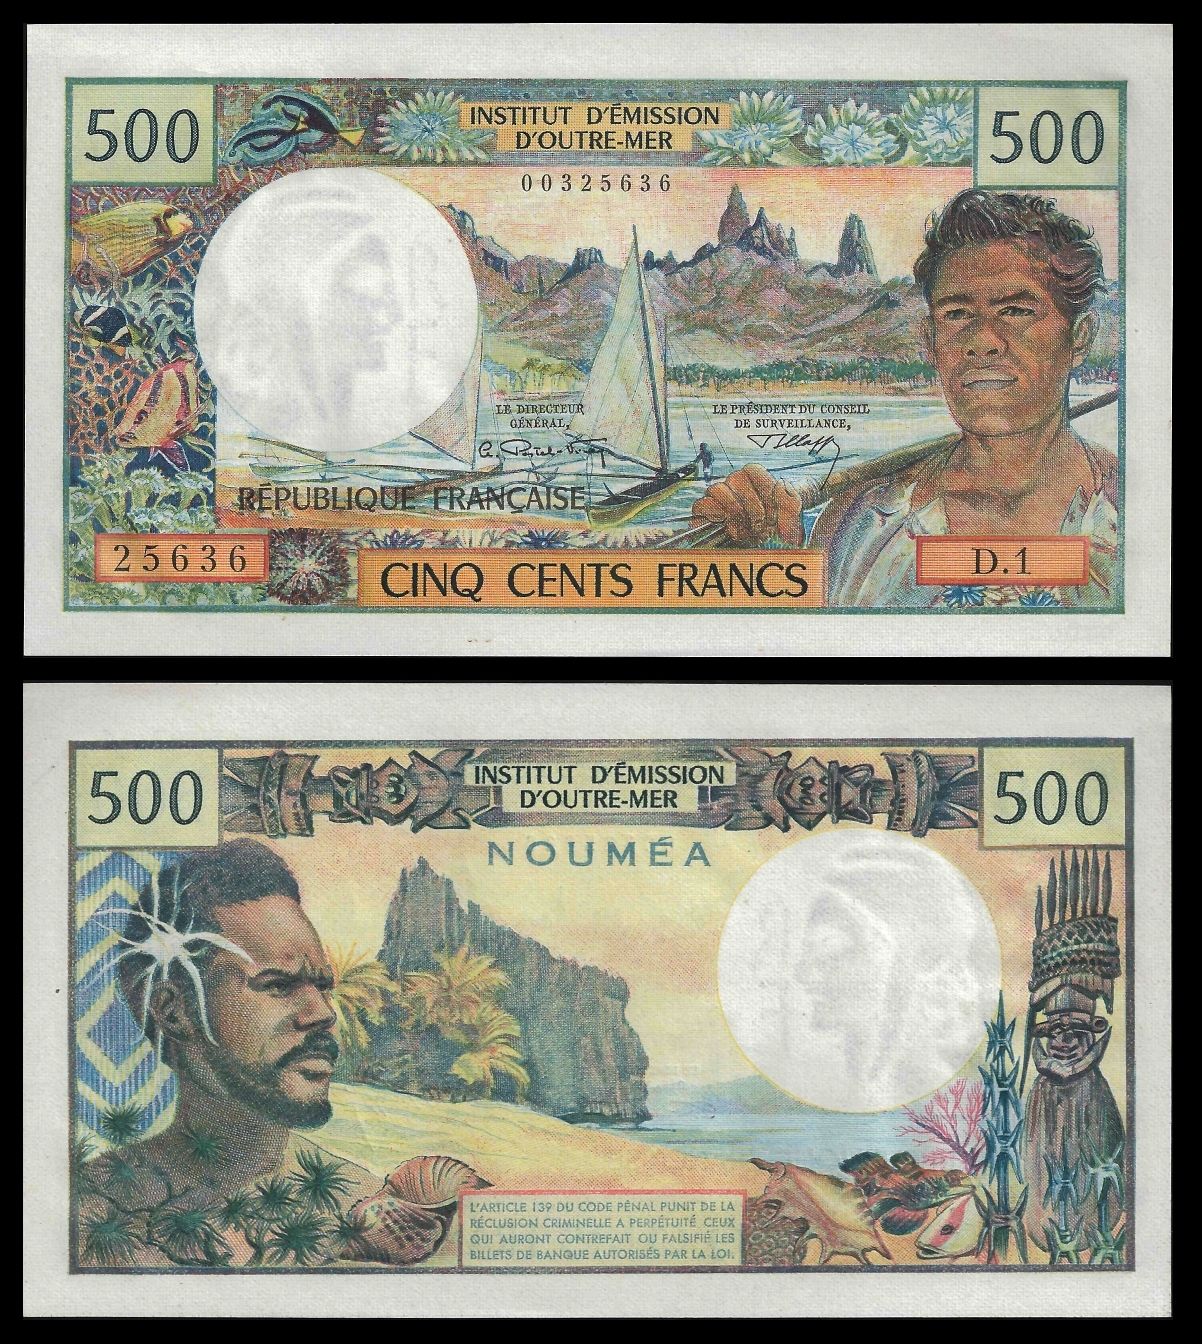 500 francs New Caledonia 1969